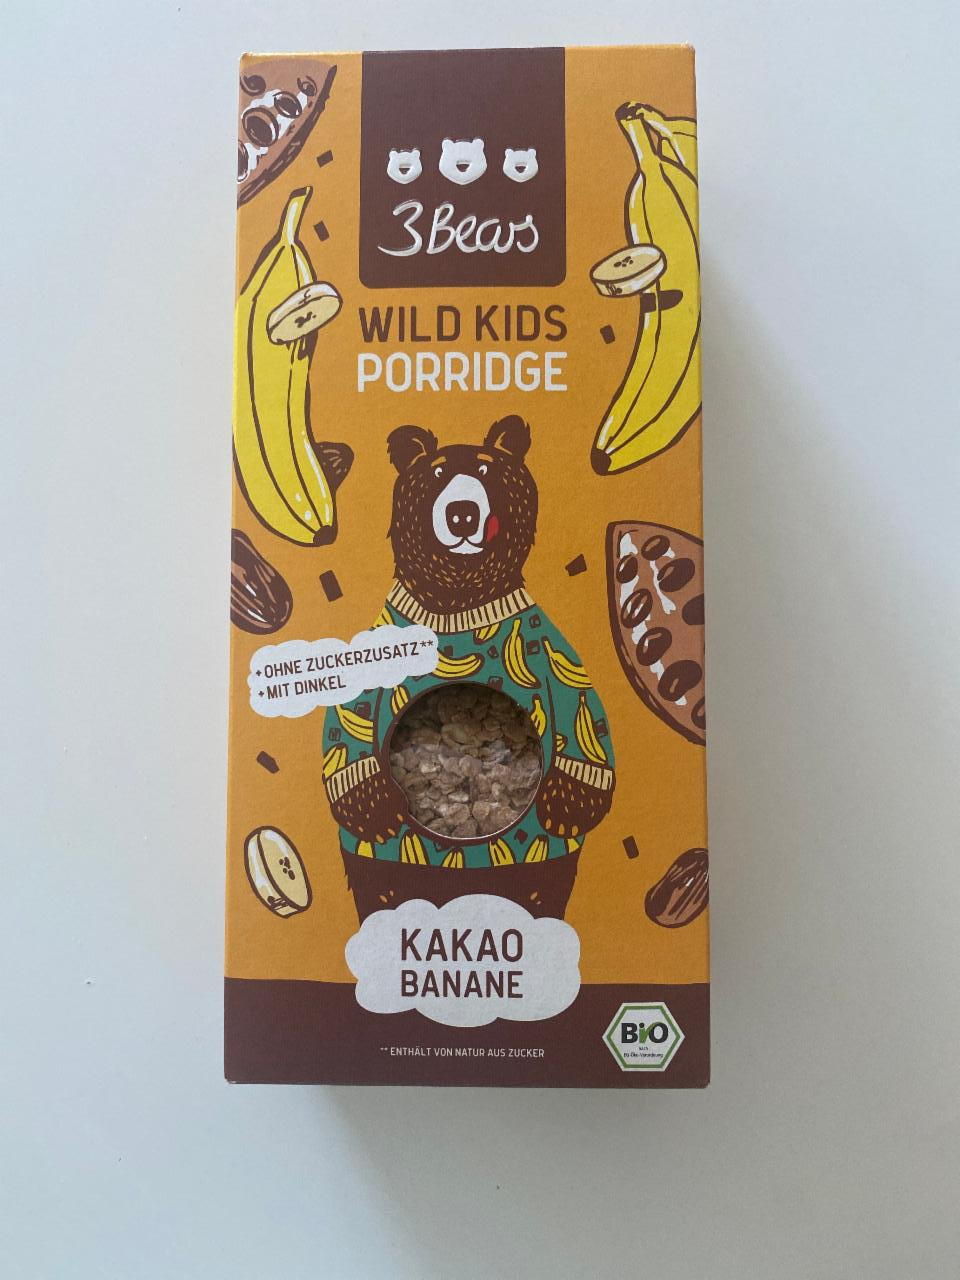 Fotografie - Wild kids porridge Kakao Banane 3 Bears